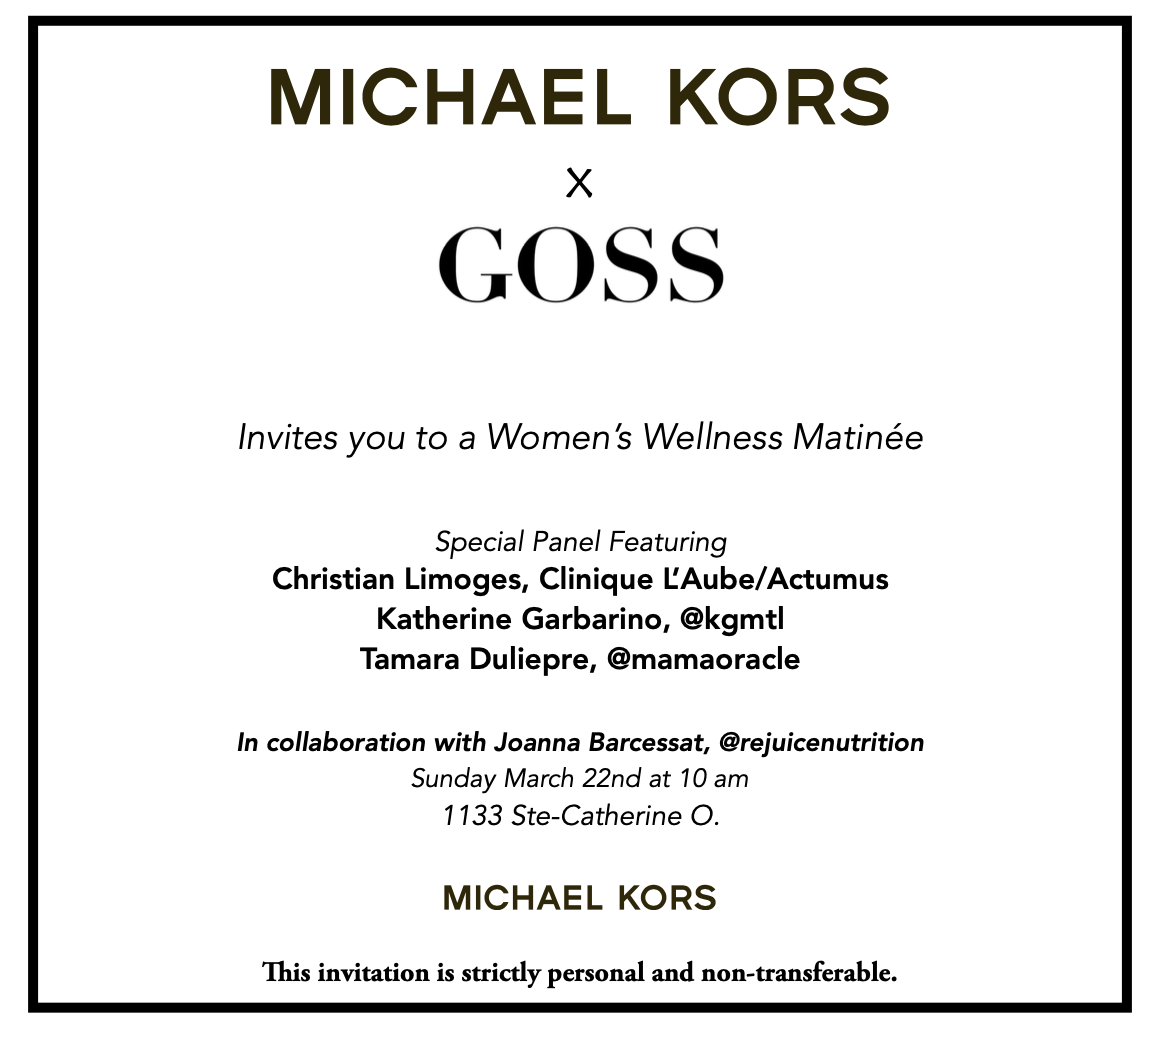 Michael Kors Event